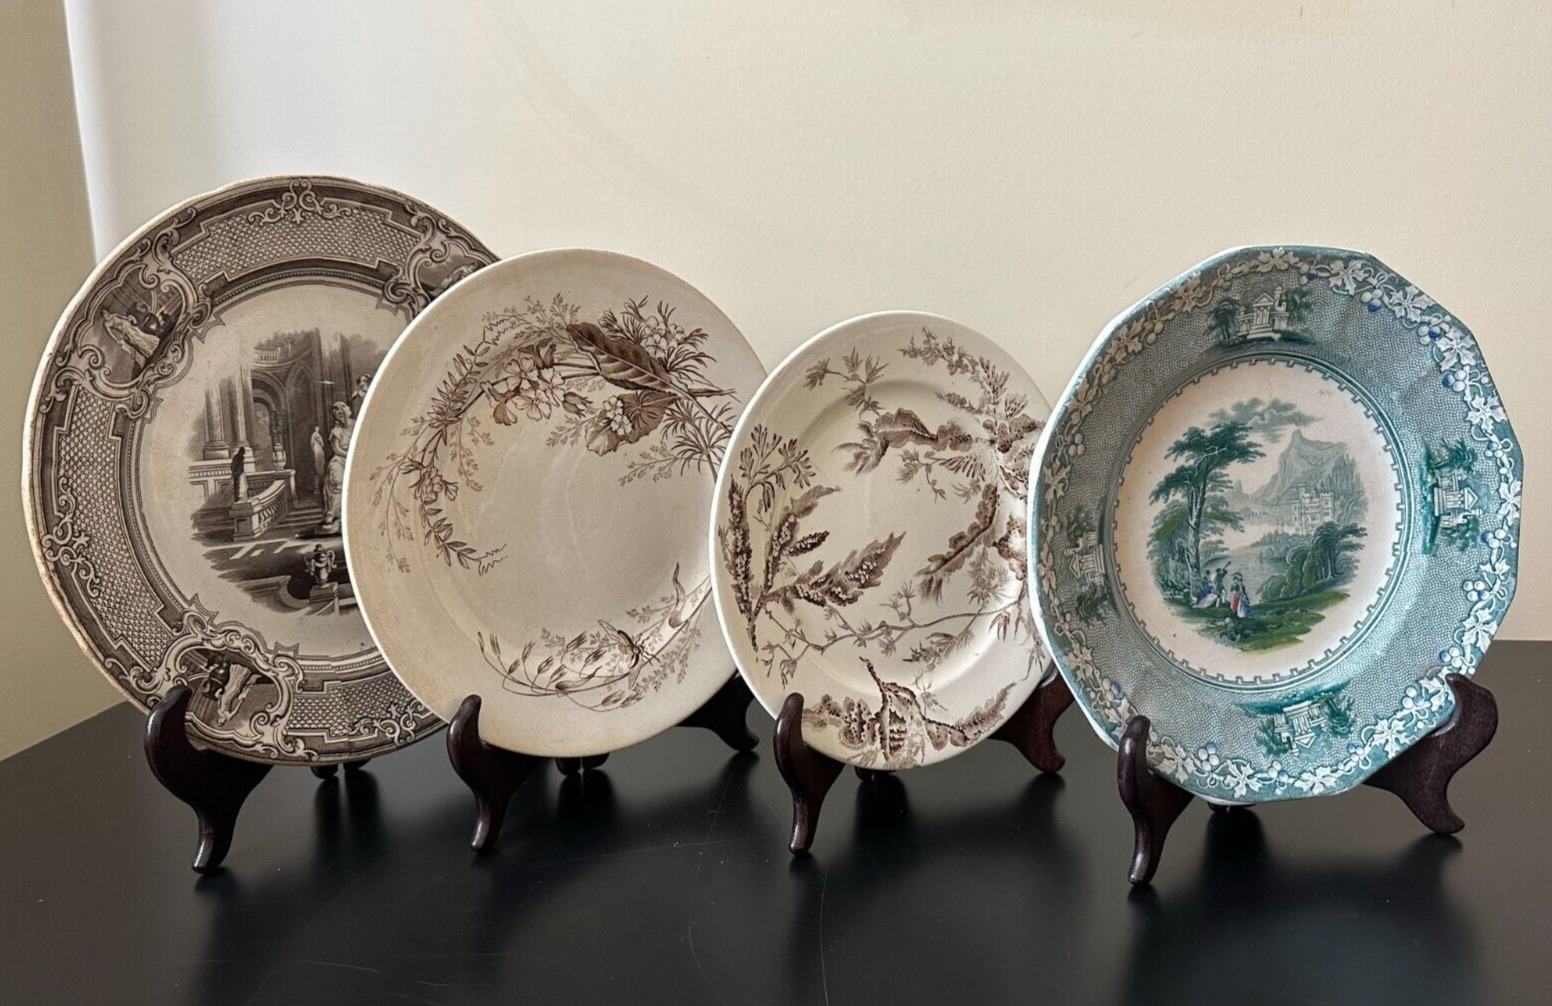 4 Vintage/antique plates - Minerva, Staffordshire, Ashworth, Wedgwood